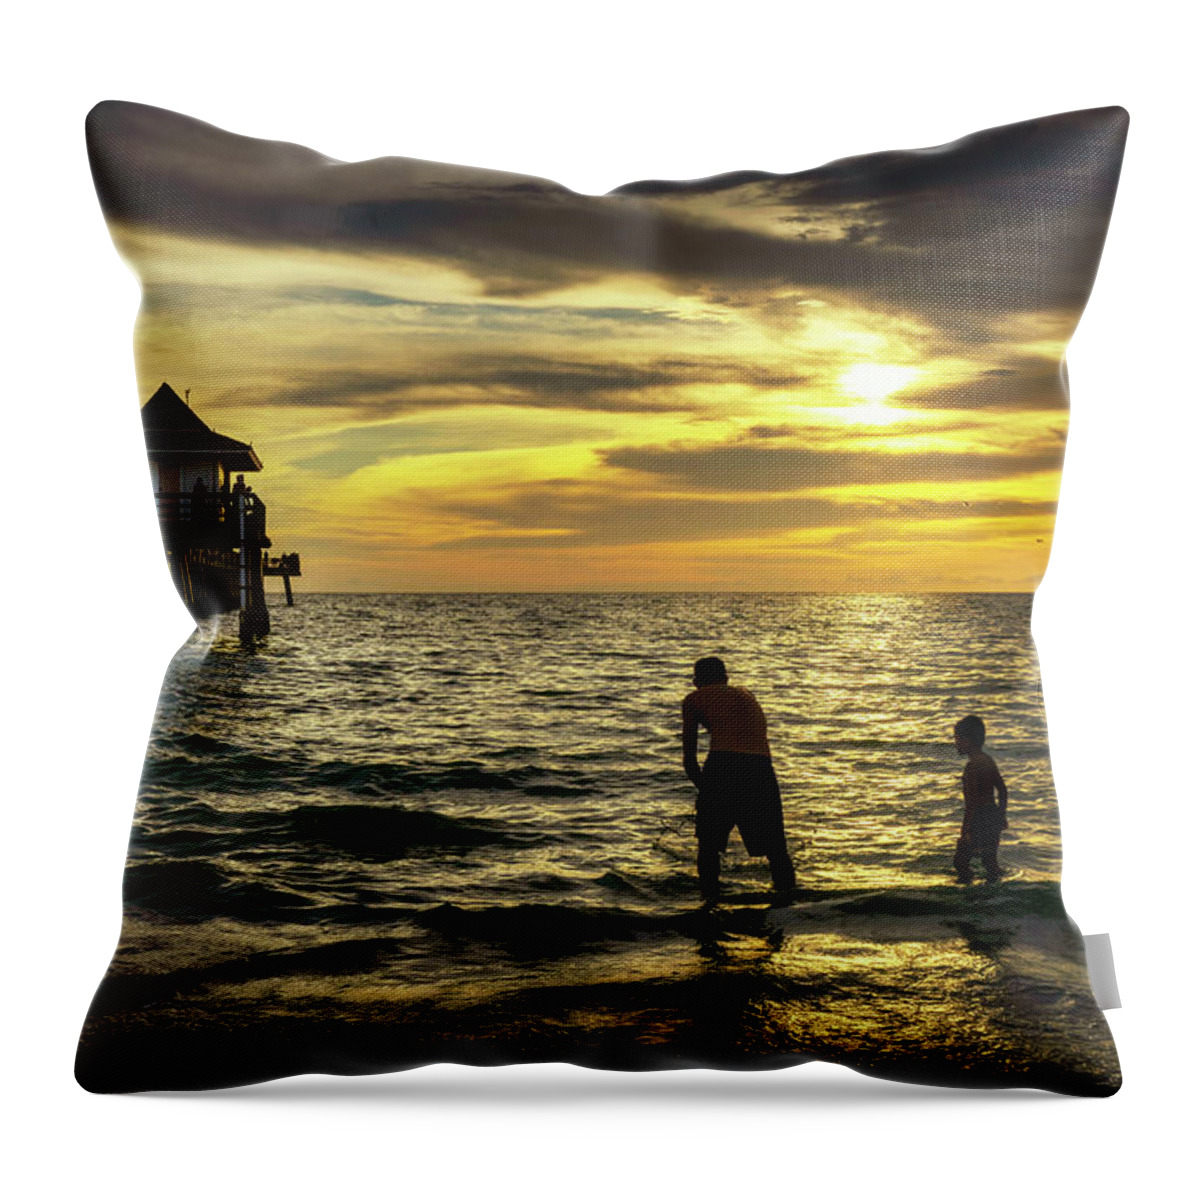 Estock Throw Pillow featuring the digital art Florida, Naples, Fishing Pier, Playing On The Beach by Gabriel Jaime Jimenez